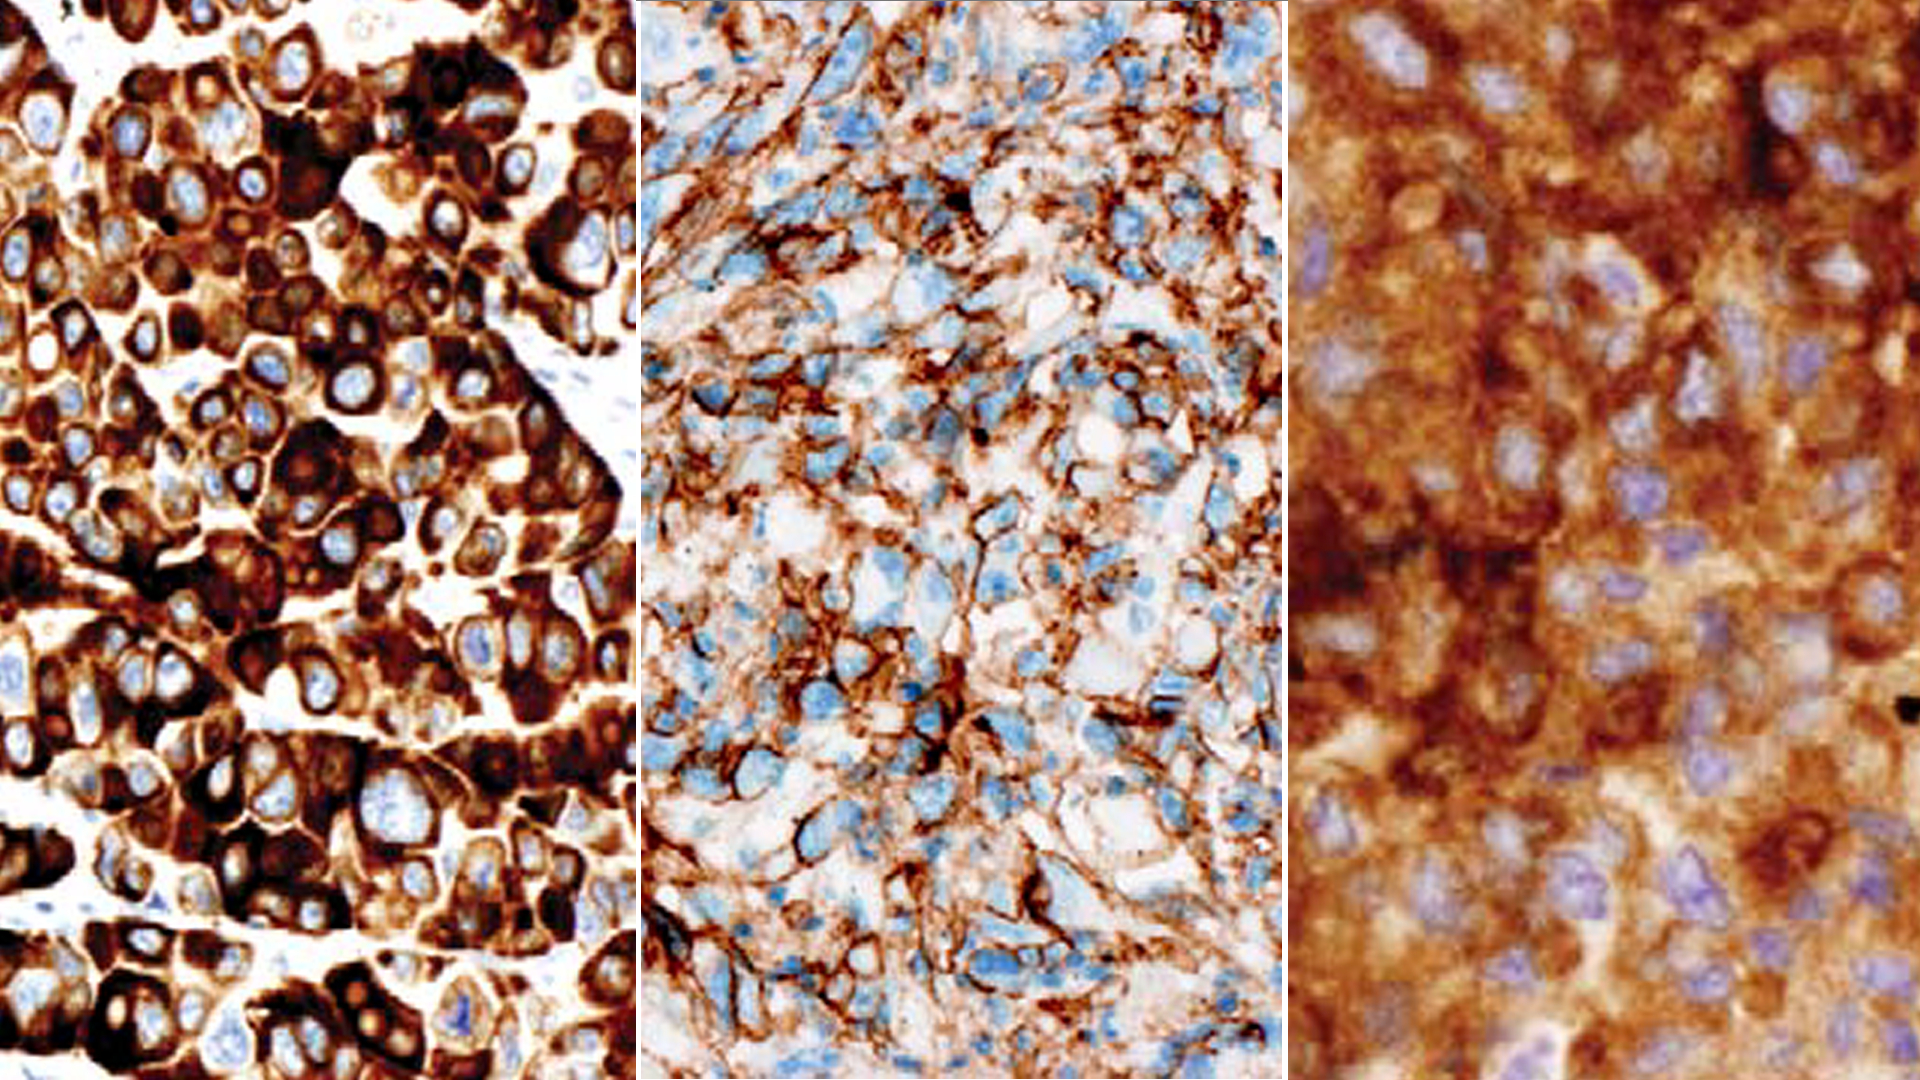 adenocarcinoma vs large cell carcinoma vs small cell carcinoma